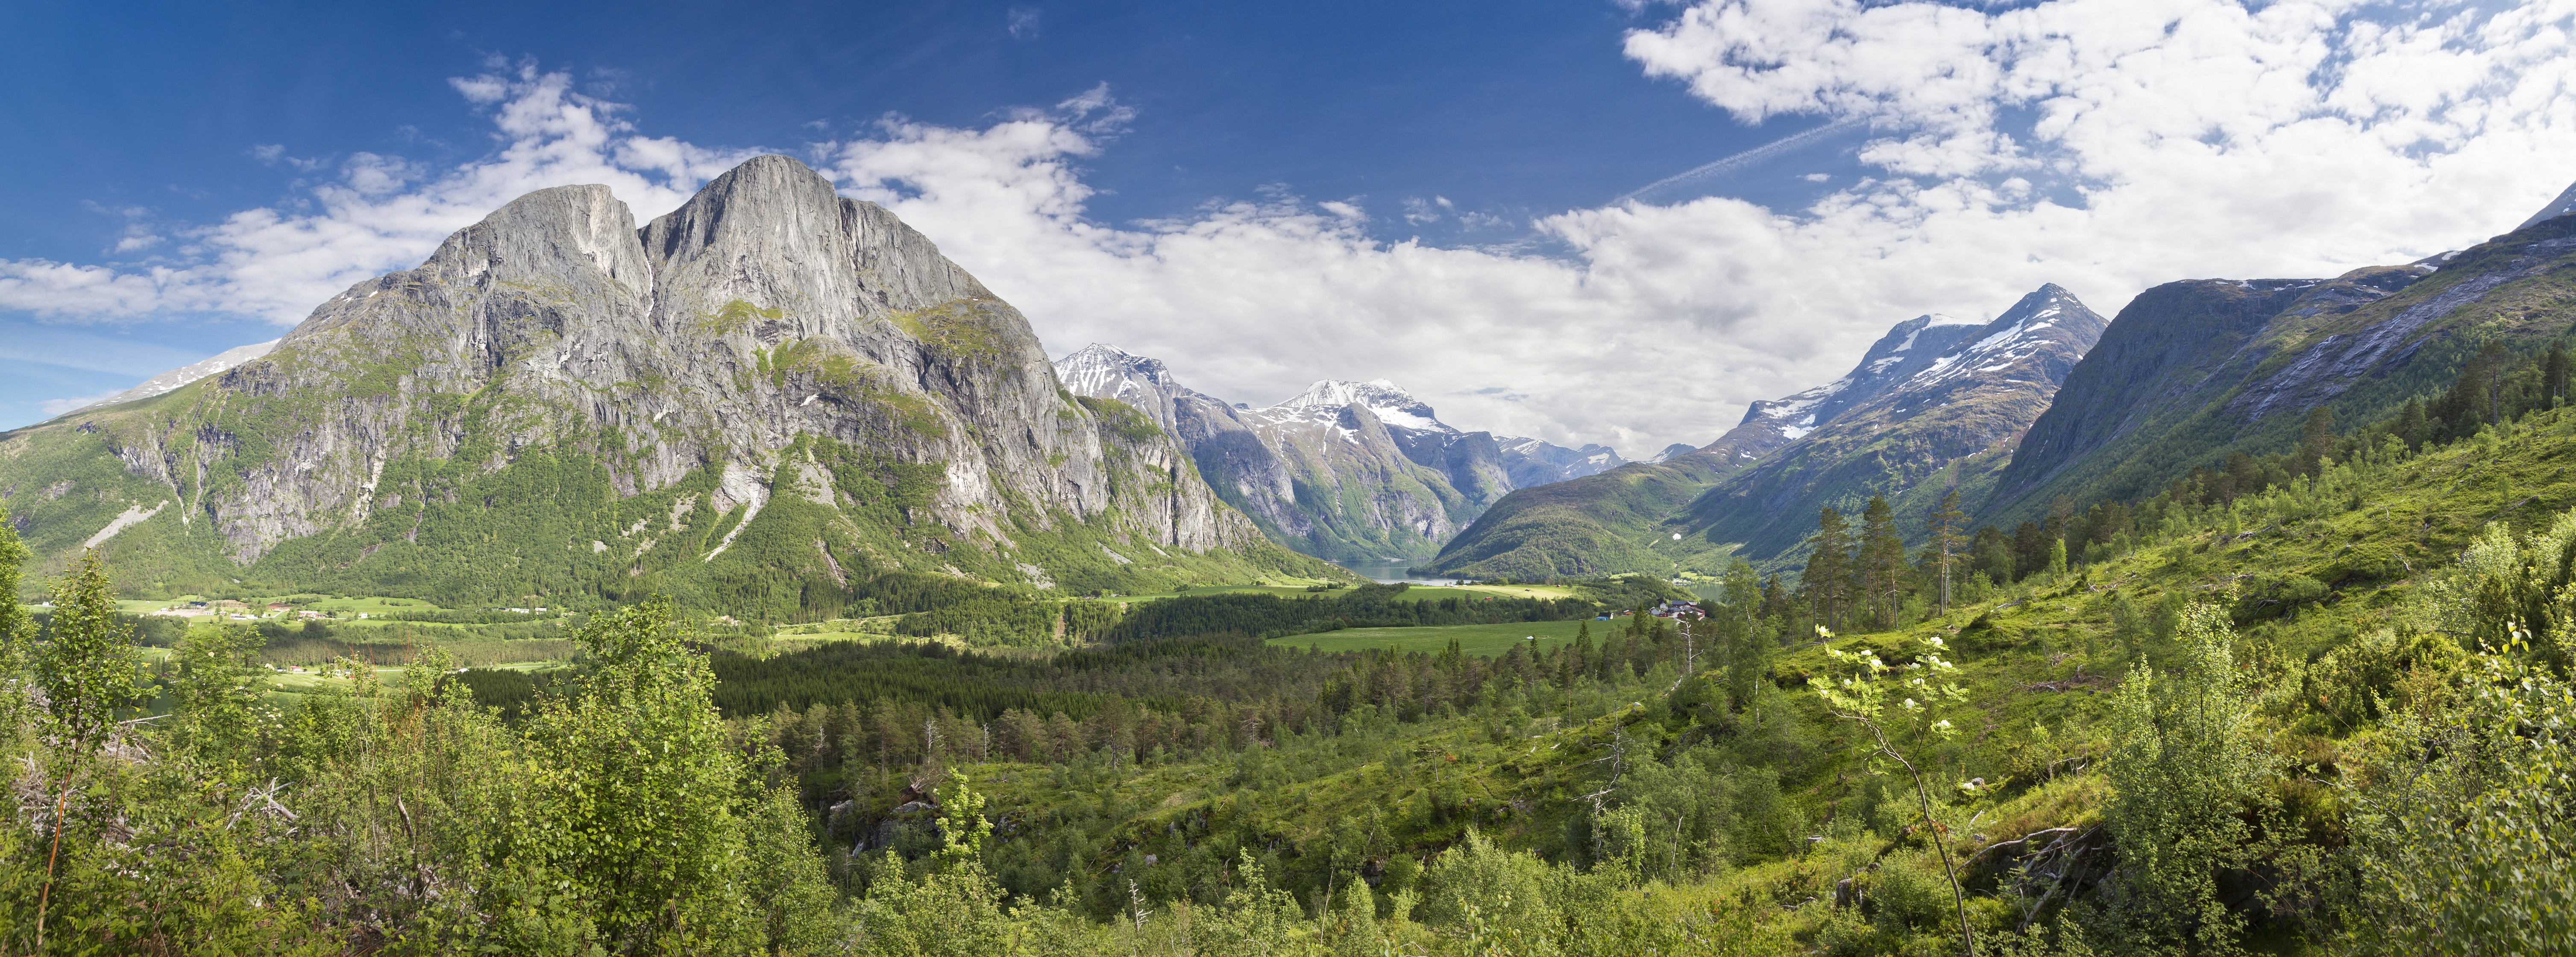 Valley landscape photo